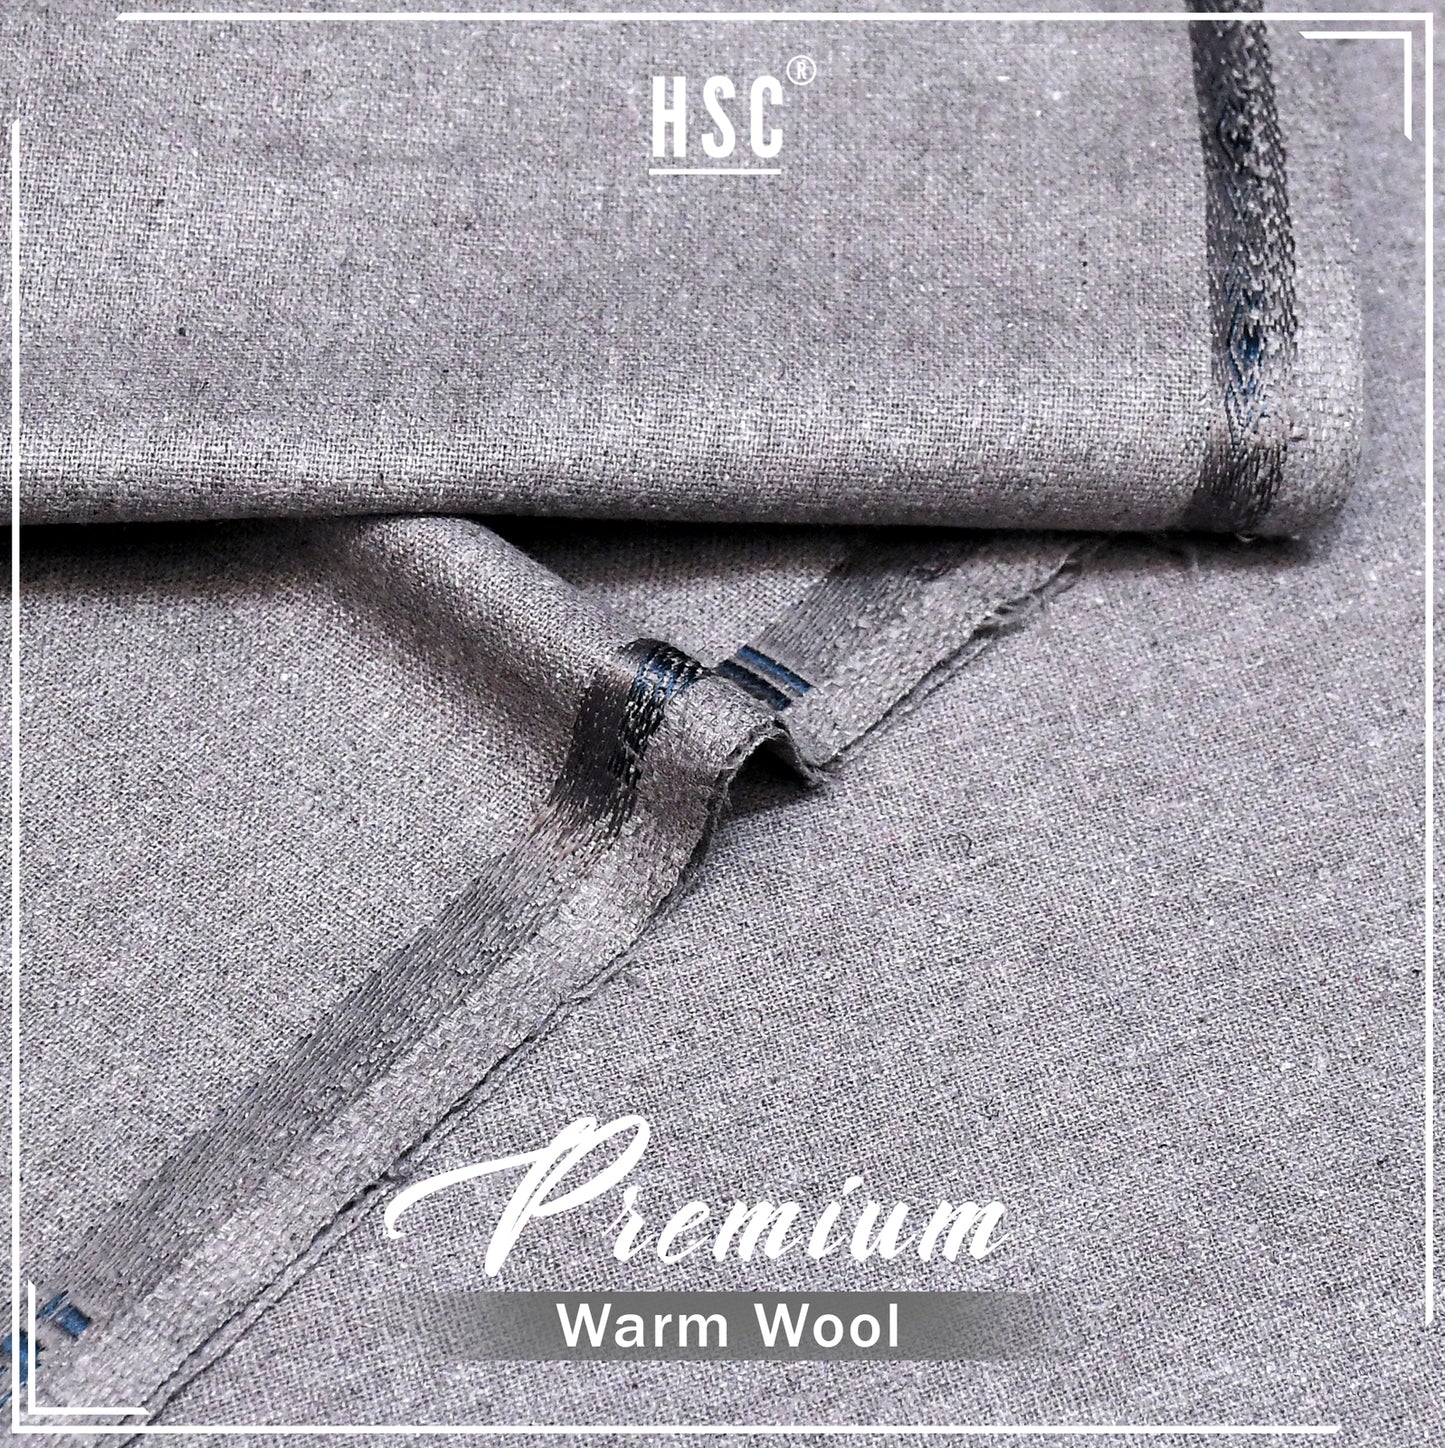 Buy 1 Get 1 Free Premium Warm Wool - PWW4 HSC